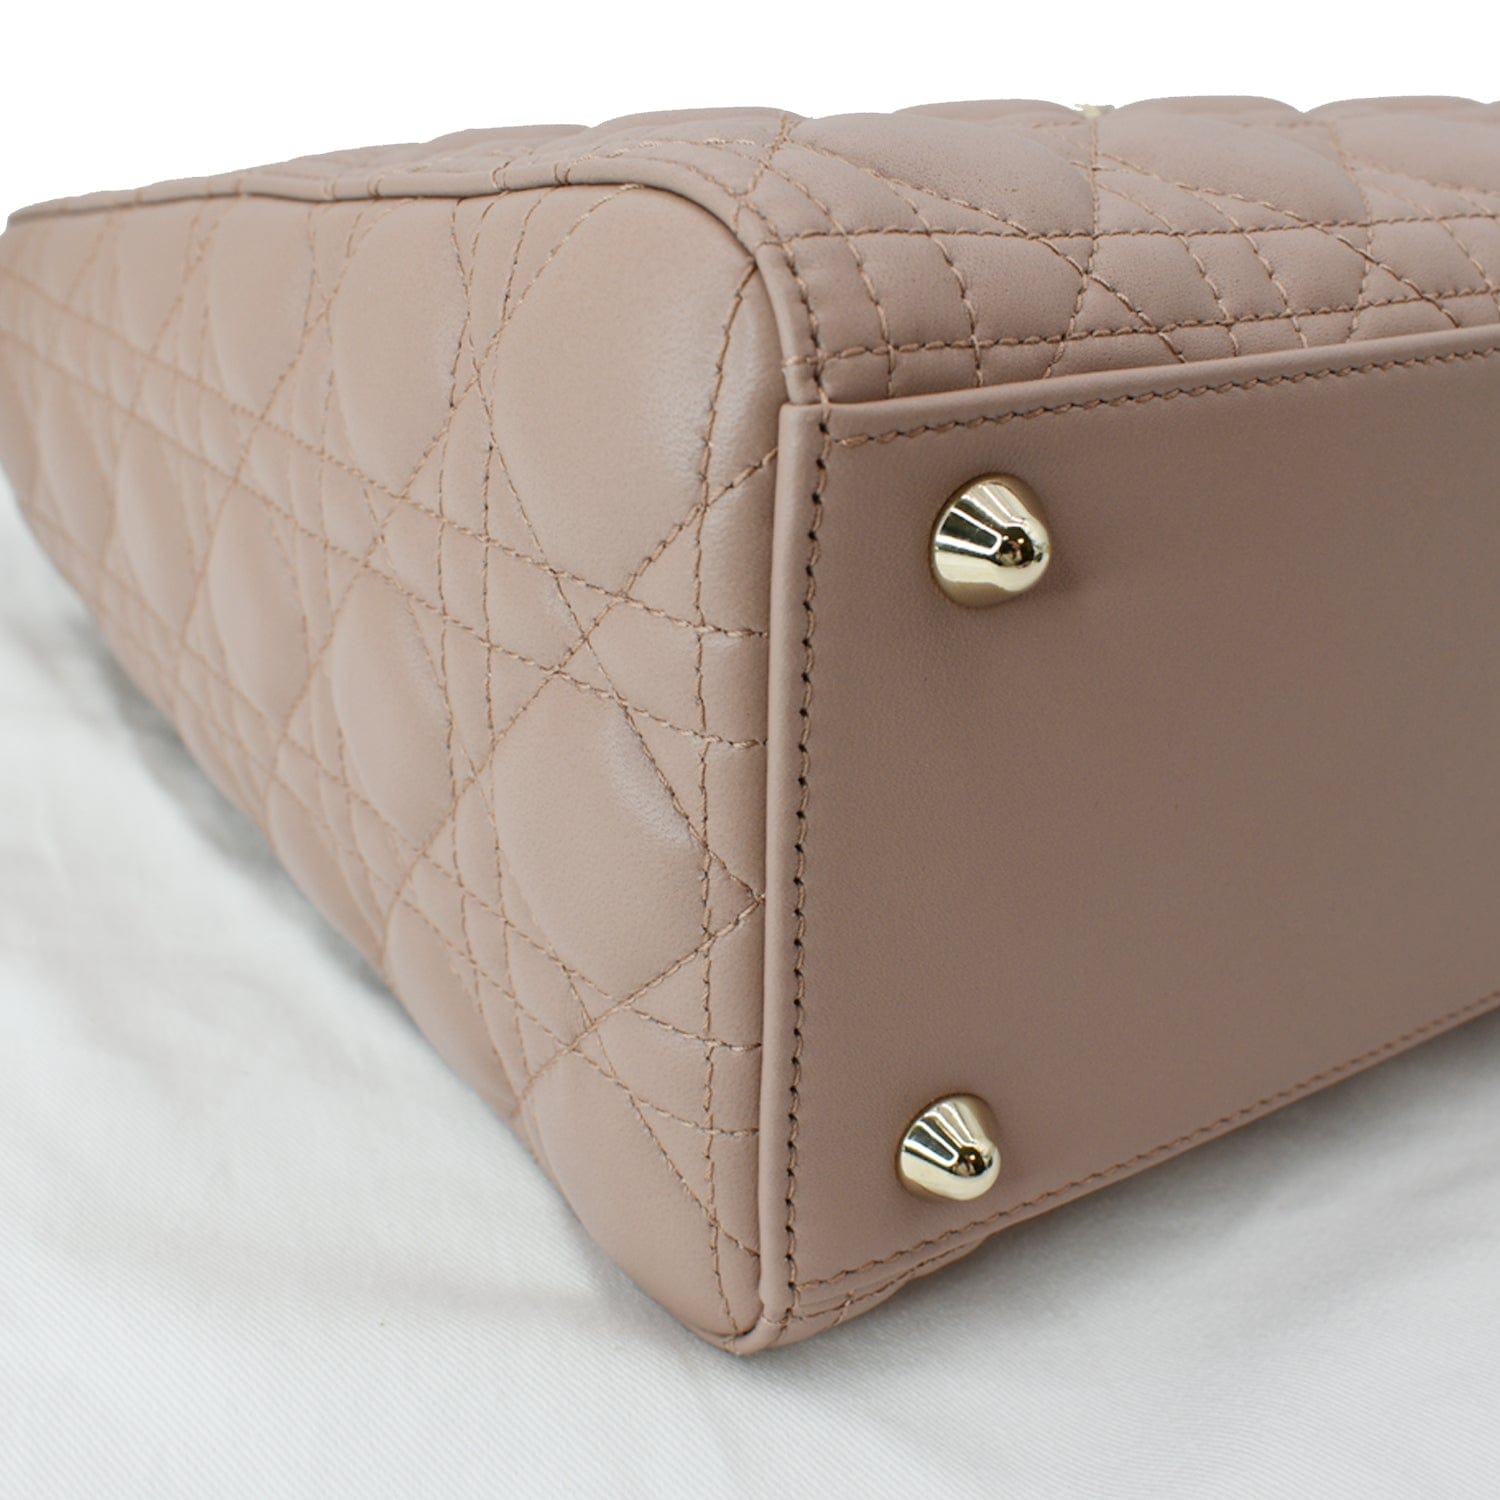 Christian Dior Blush Toiletry Bag  Rent Christian Dior Handbags for  $55/month